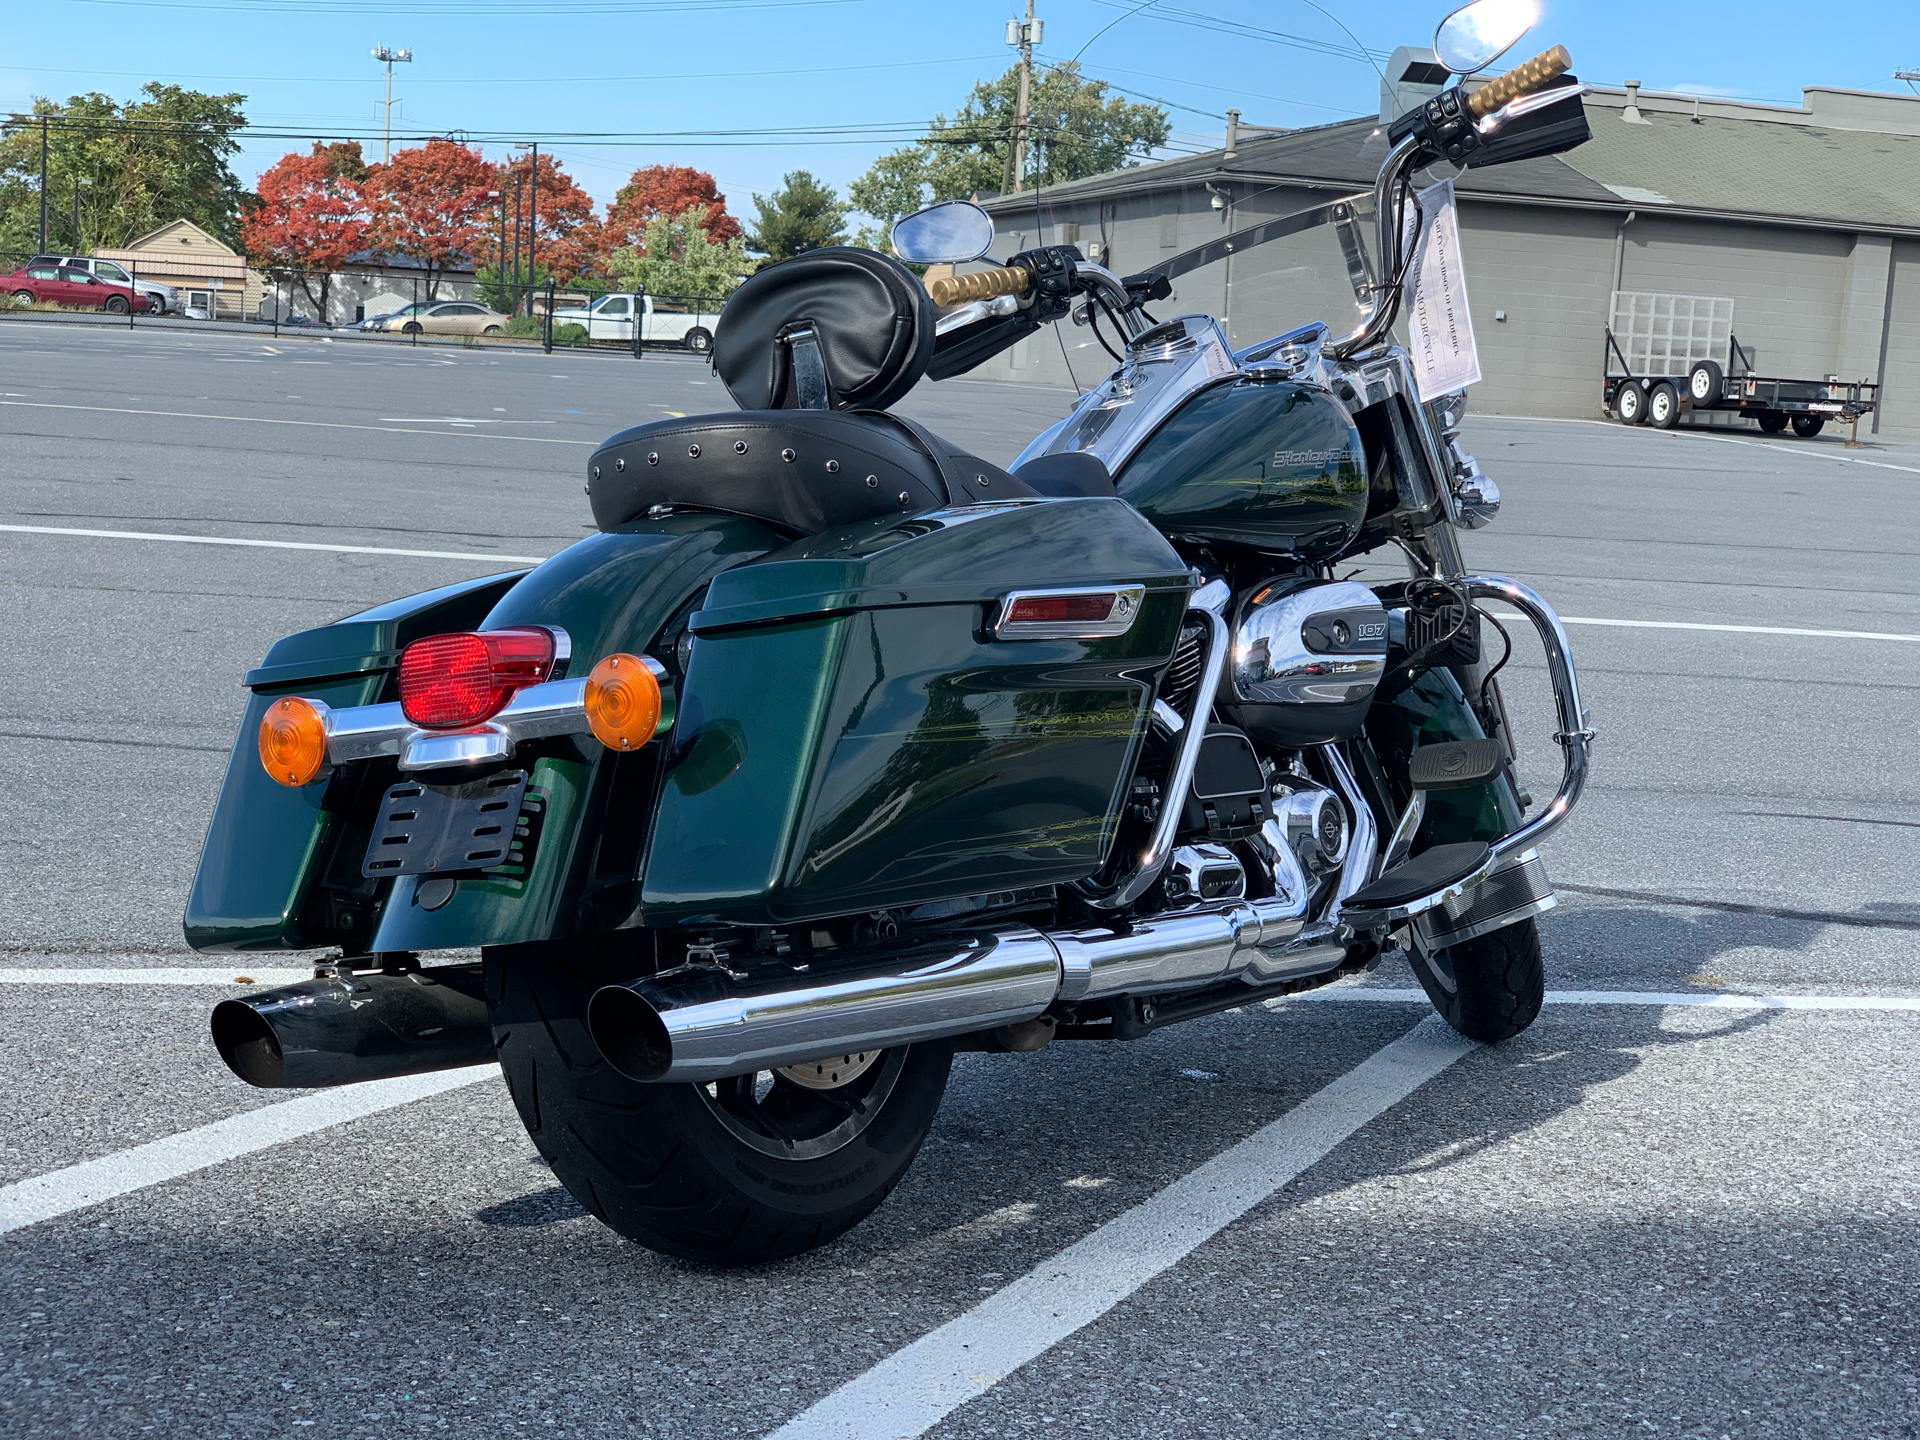 2019 Harley-Davidson Road King® in Frederick, Maryland - Photo 4